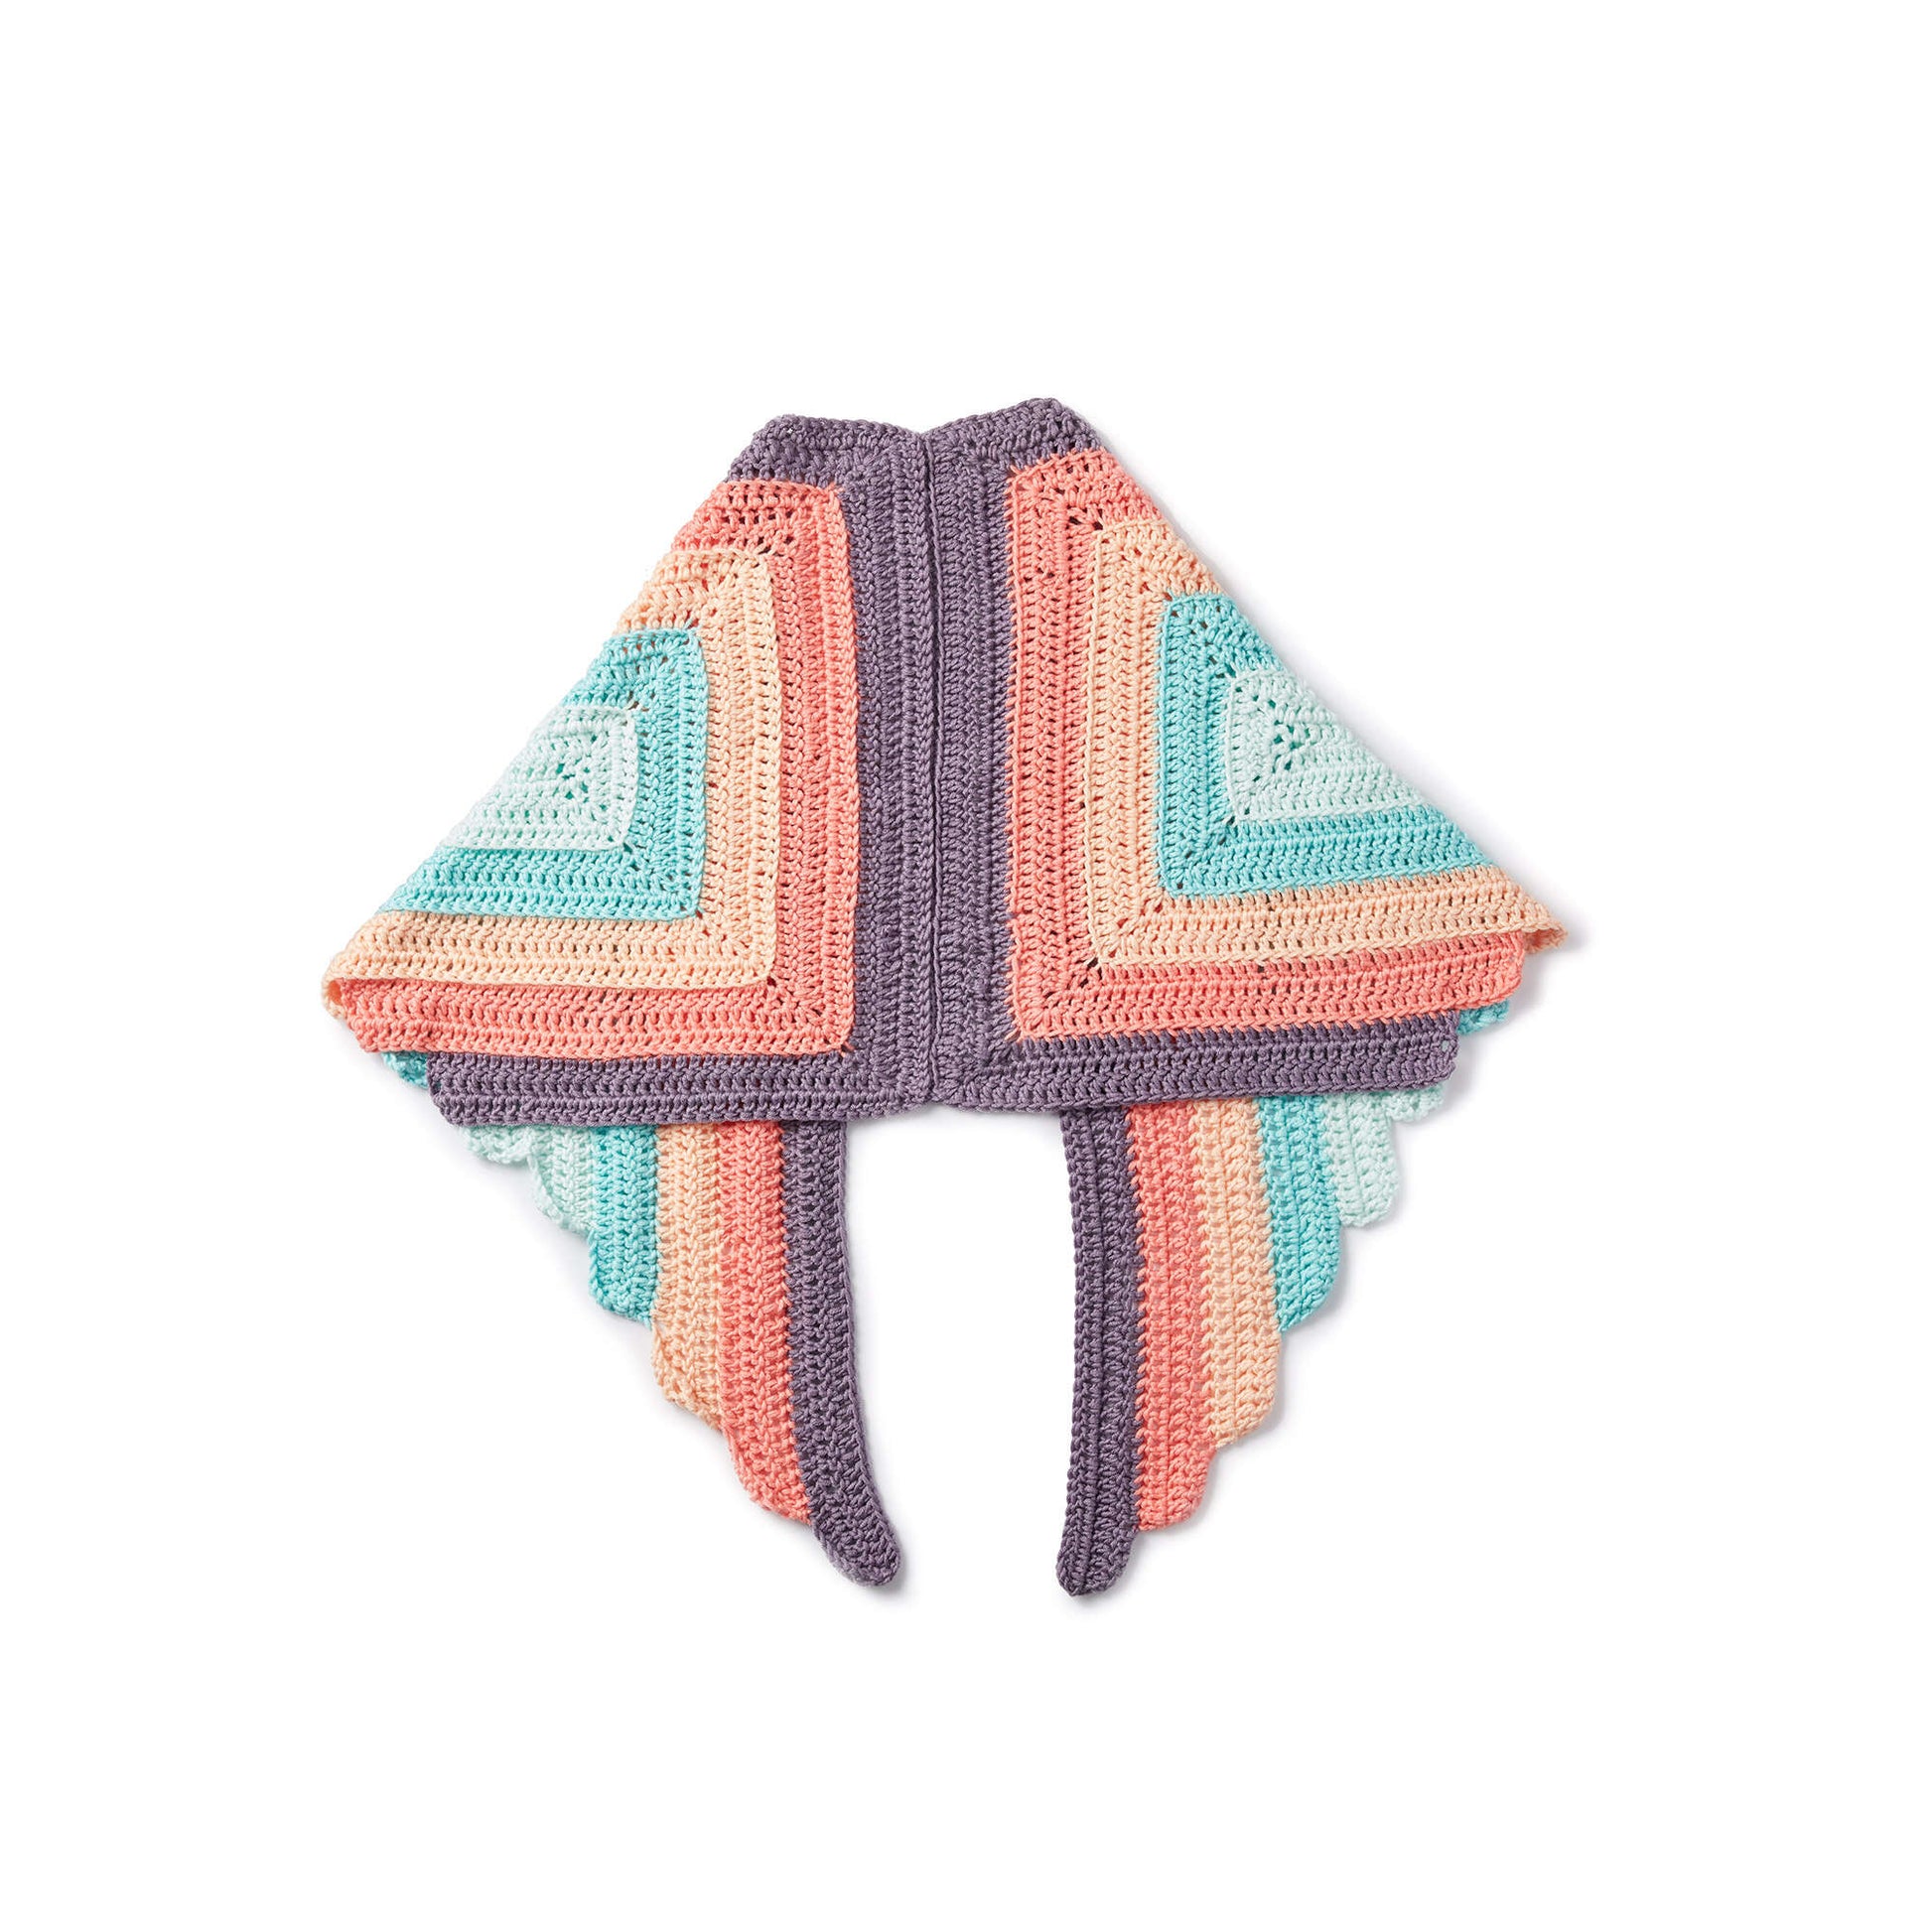 Caron X Pantone Crochet Spread Your Wings Shawl Version 1